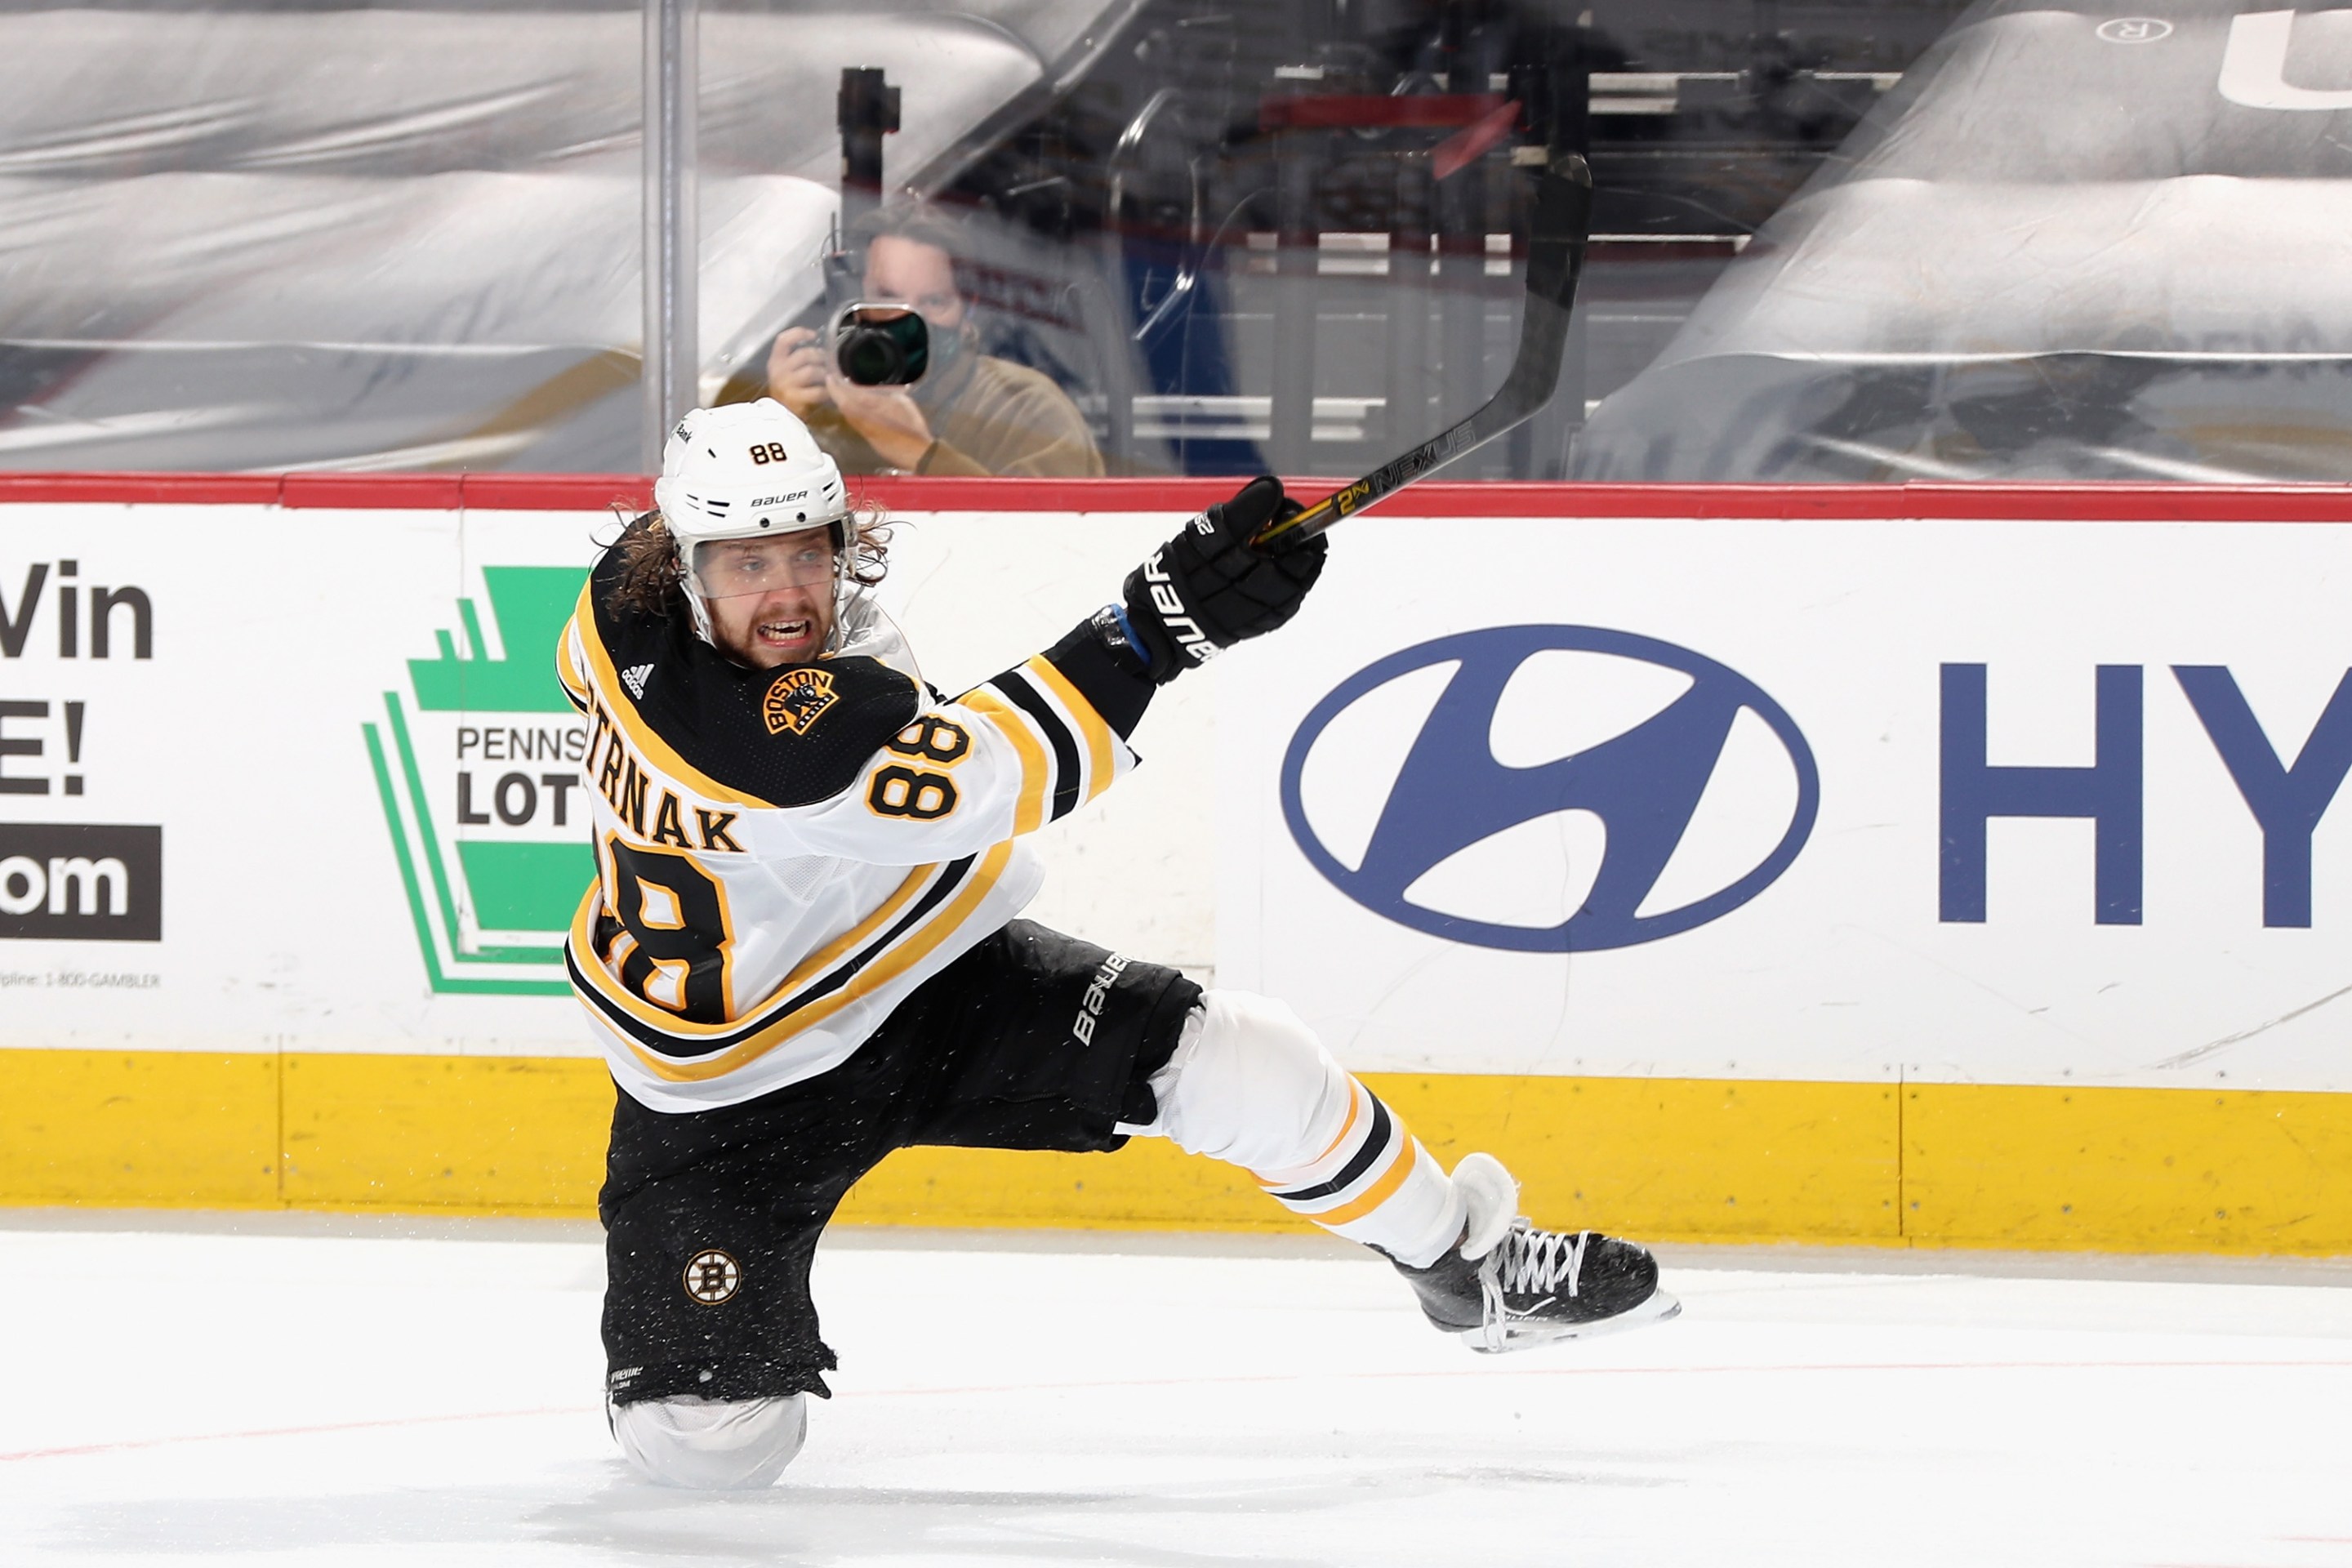 David Pastrnak #88 of the Boston Bruins takes a slapshot